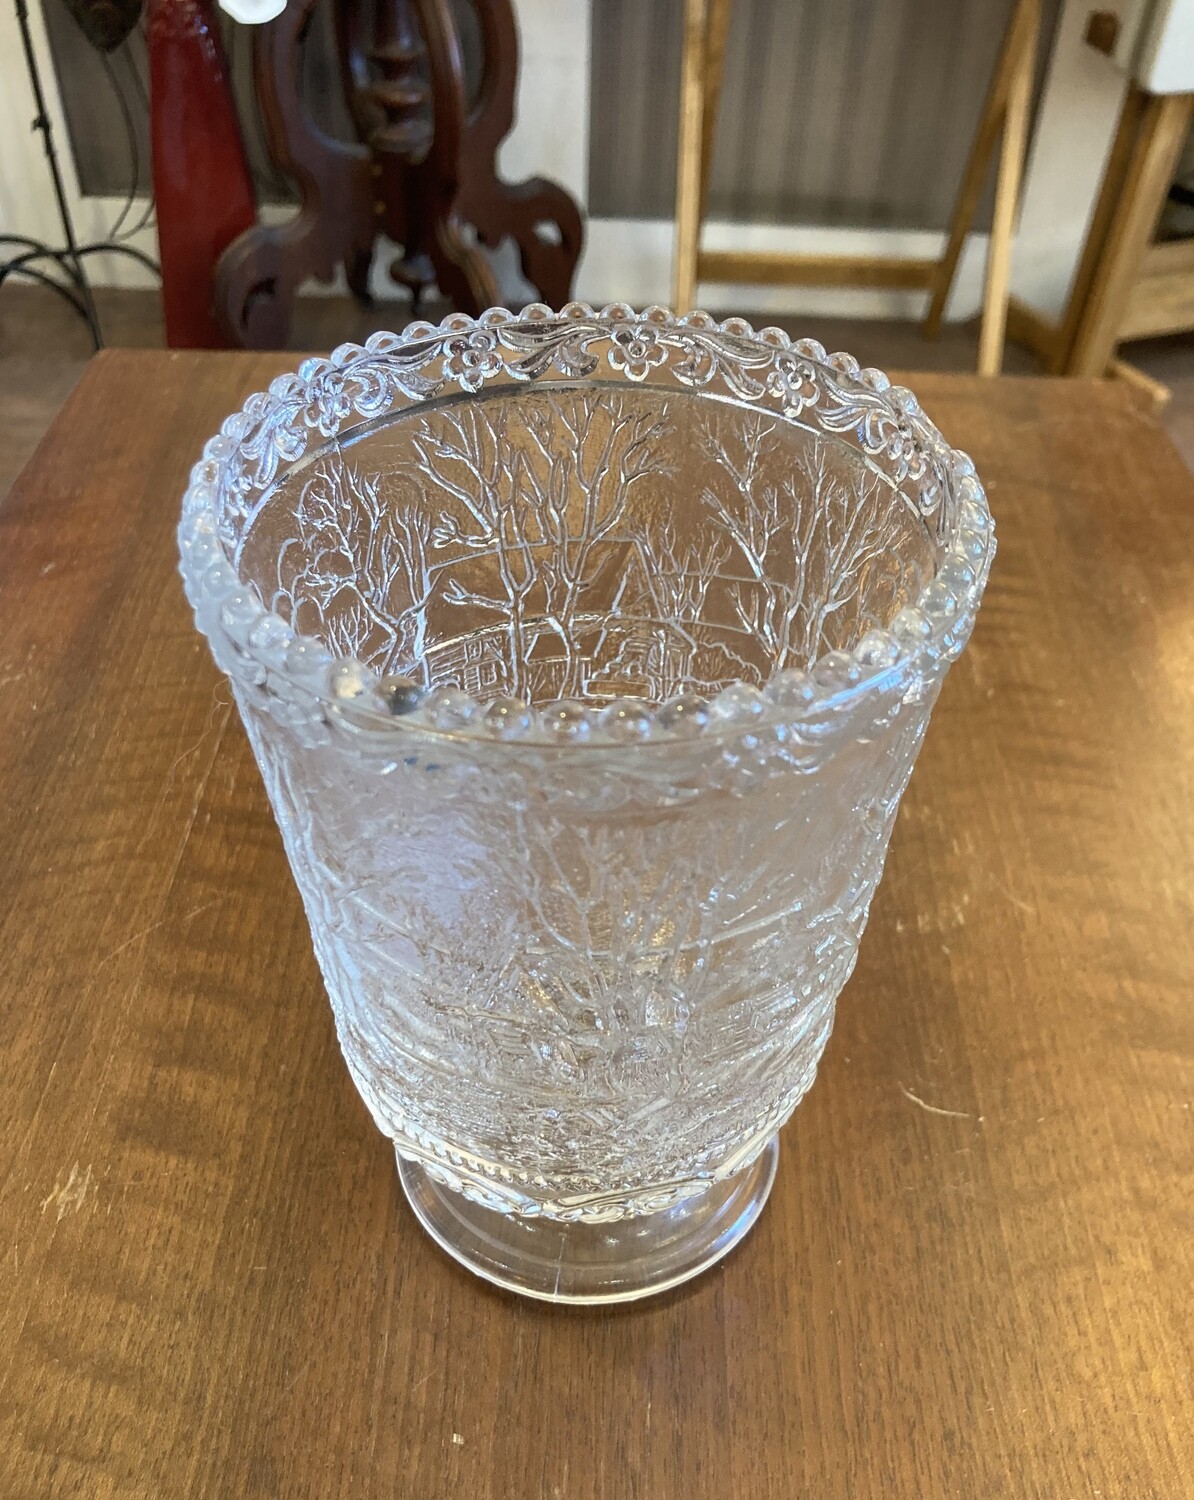 Fenton Frosted Glass Embossed Woodland Cabin Scene Vase 6 1/2" v 4.15" flaw